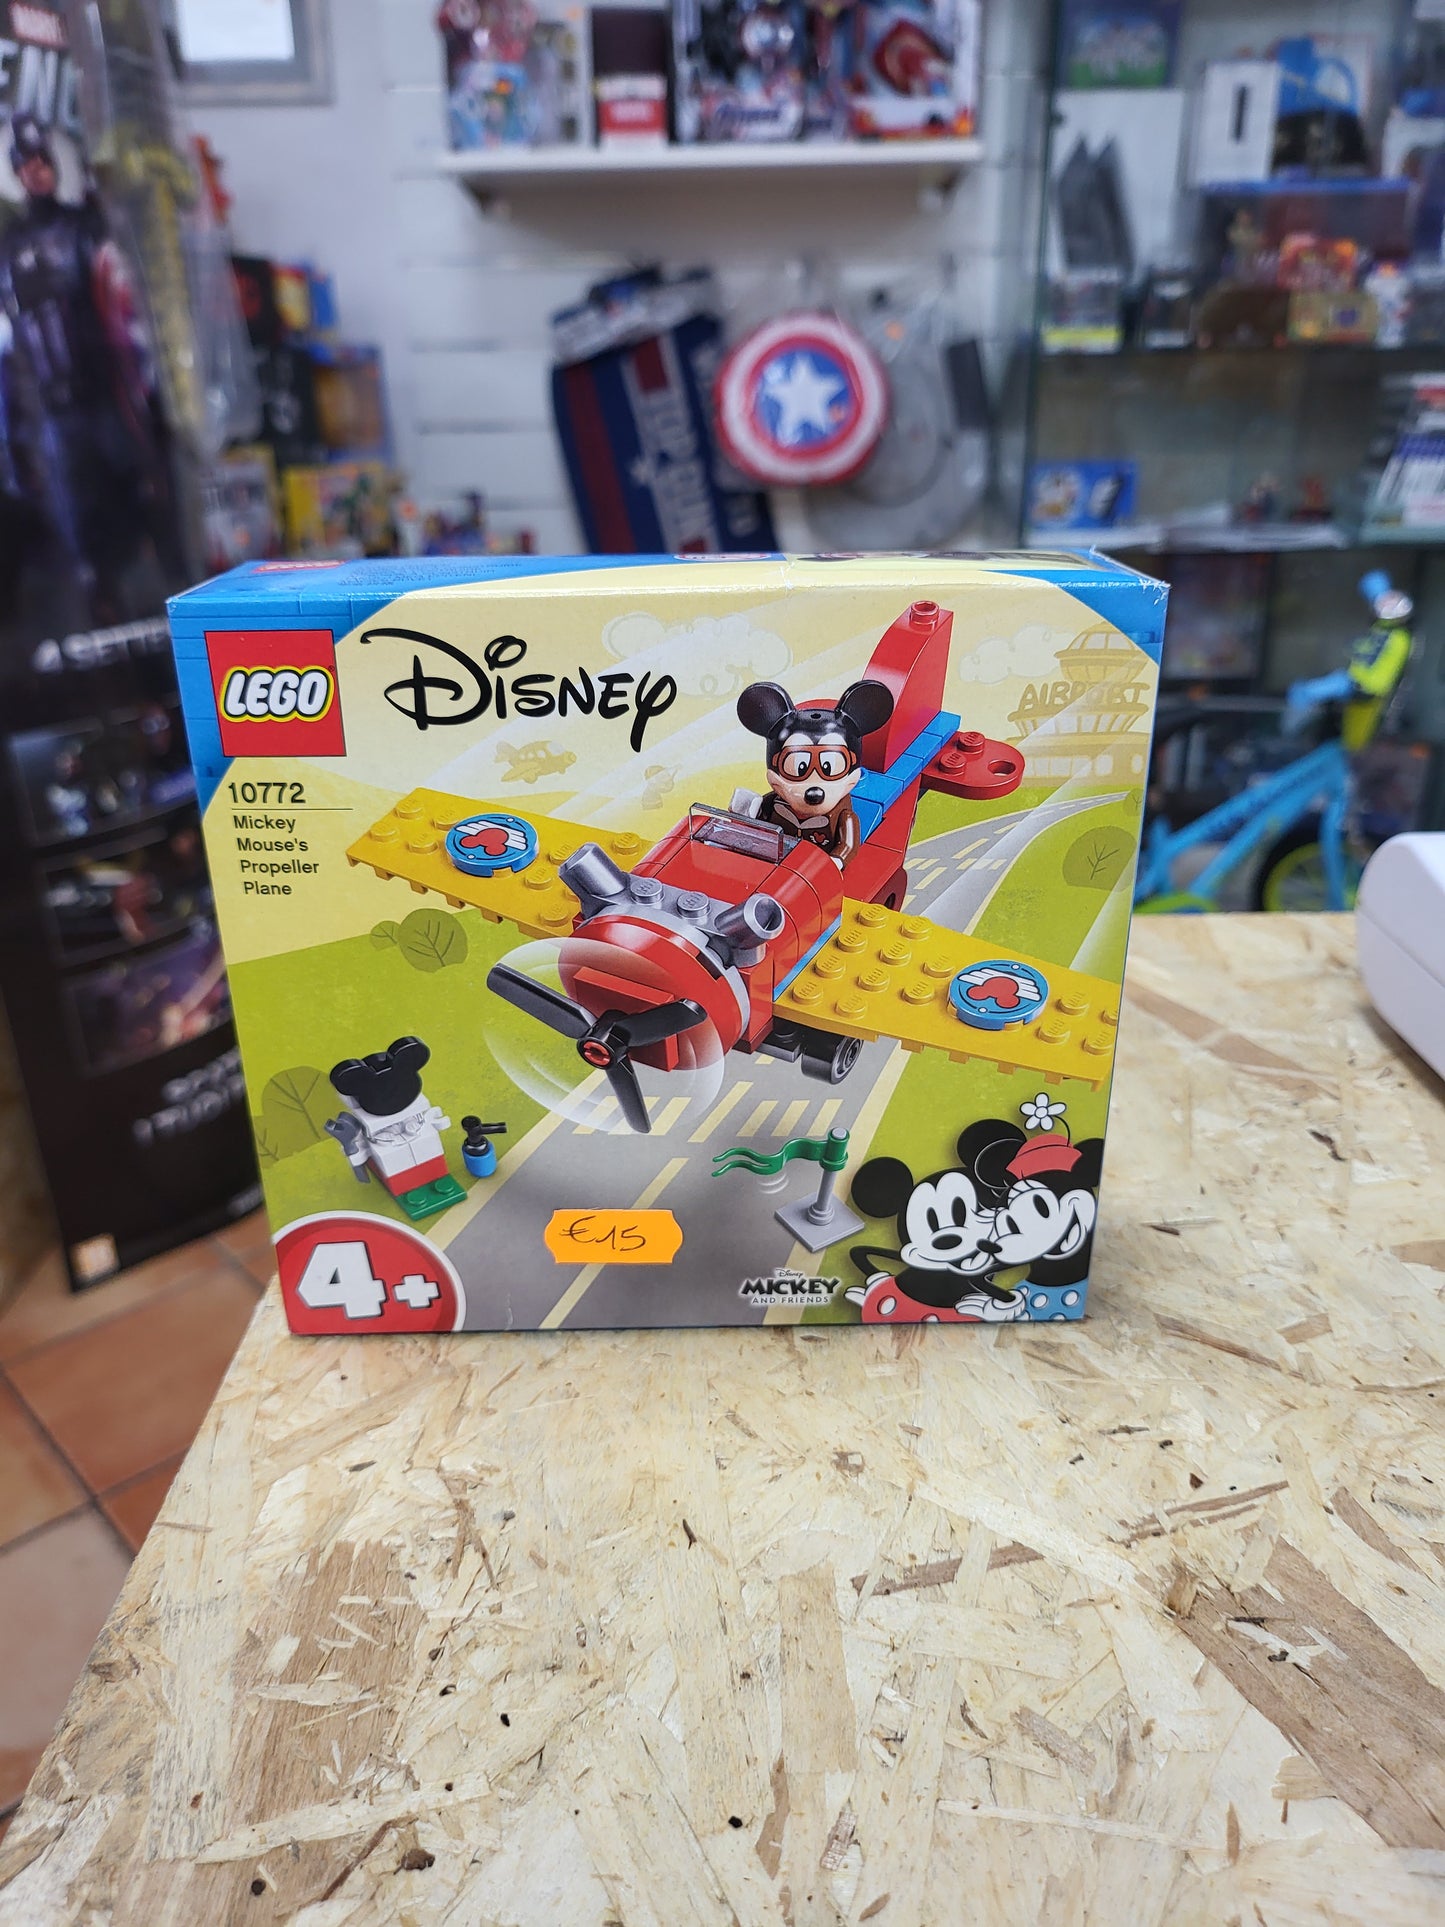 Lego 10772 disney mickey mouse's propeller plane